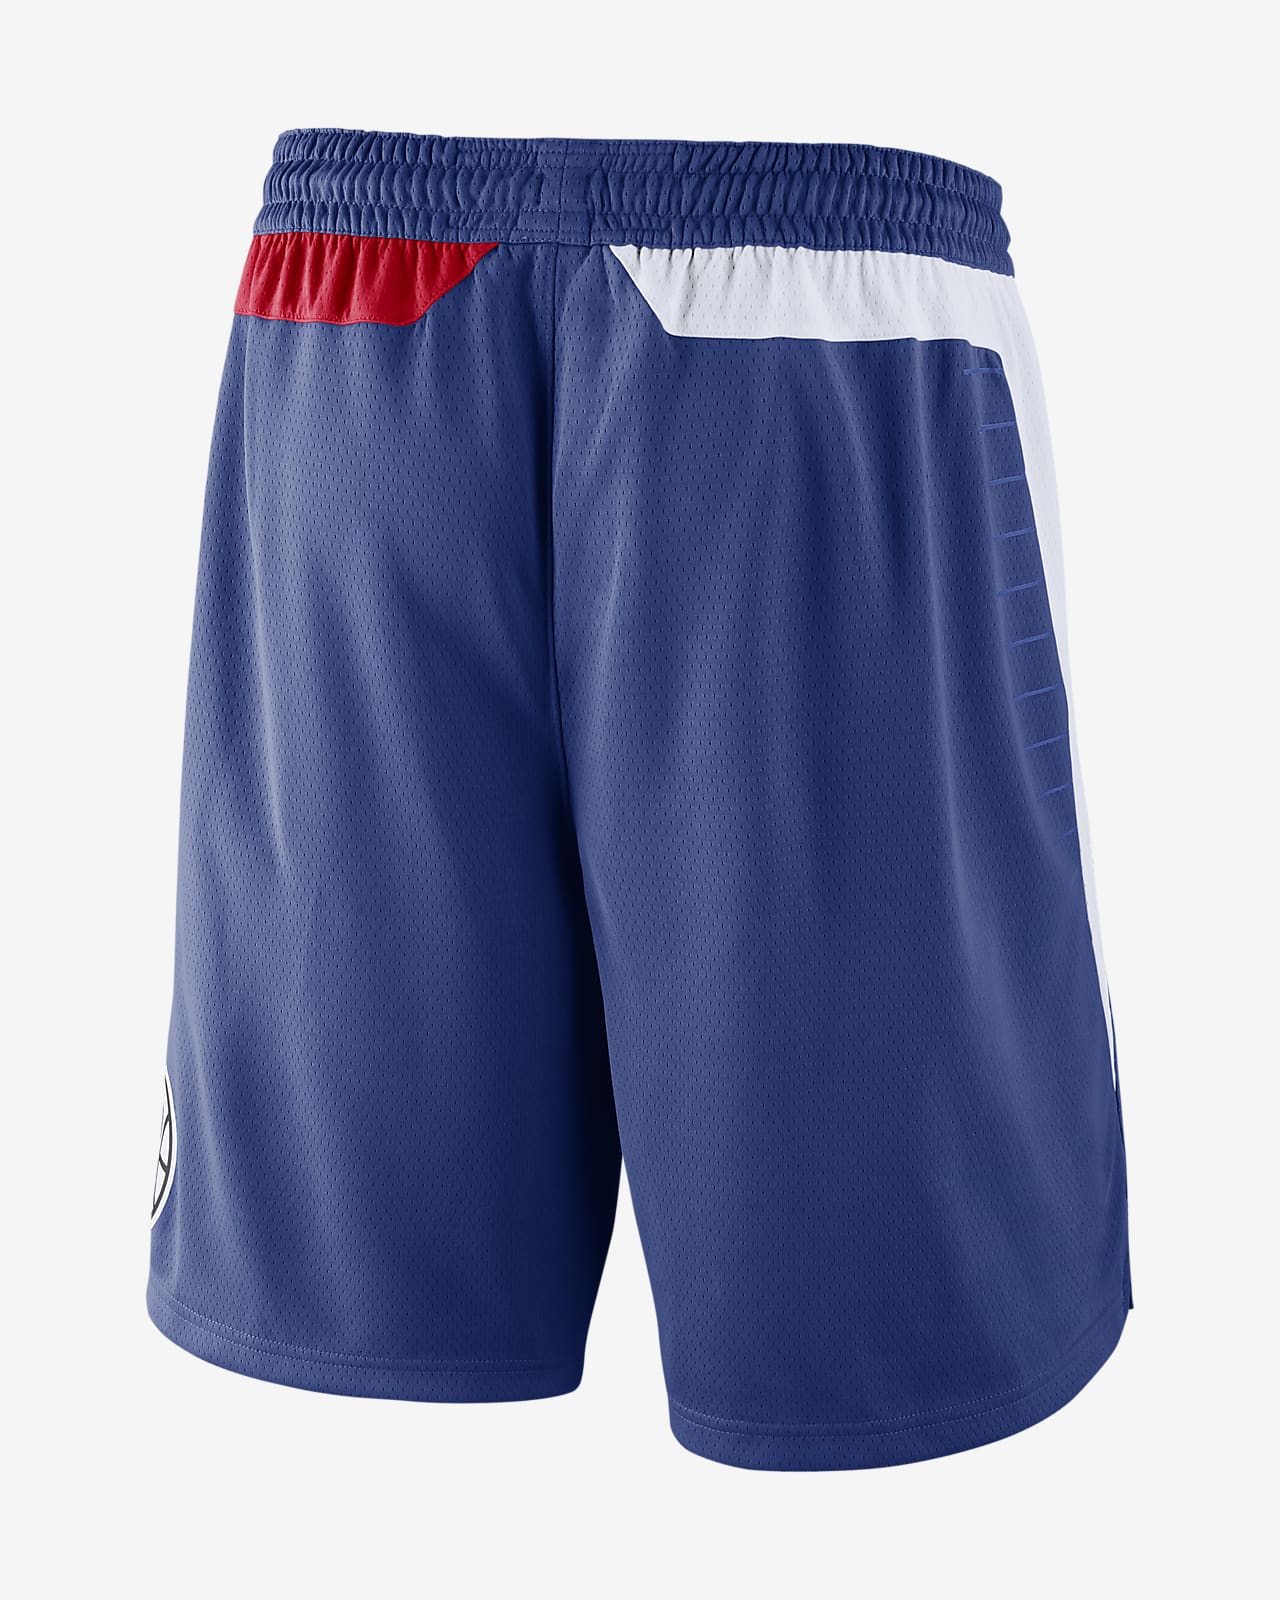 la clippers basketball shorts